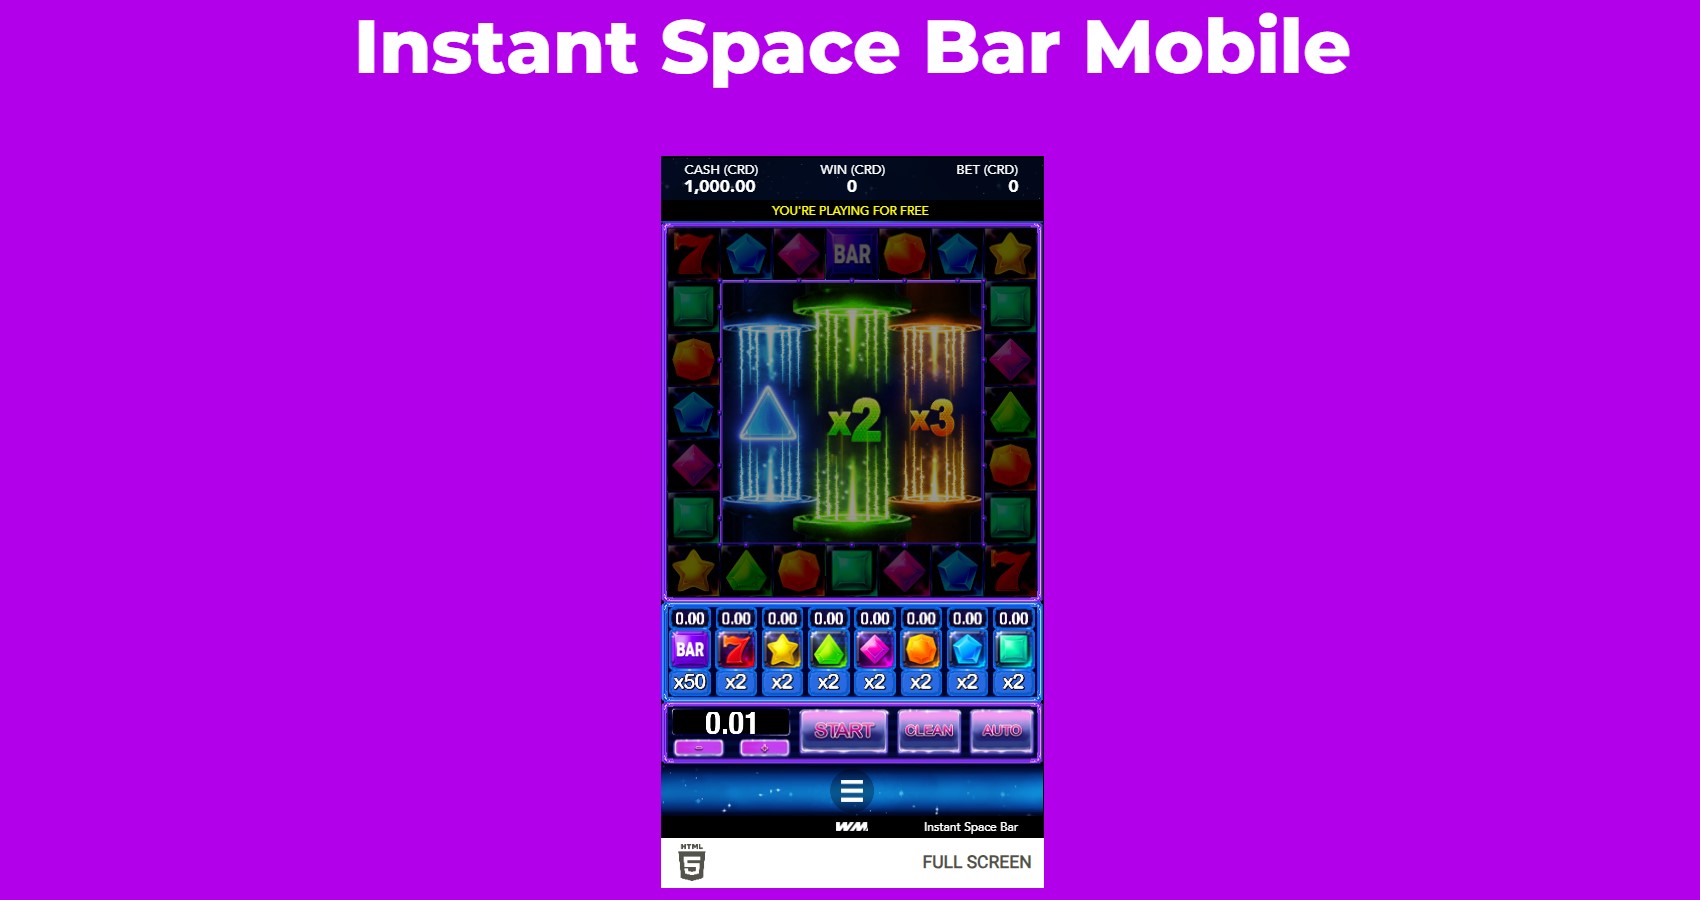 Instant Space Bar Wersja mobilna